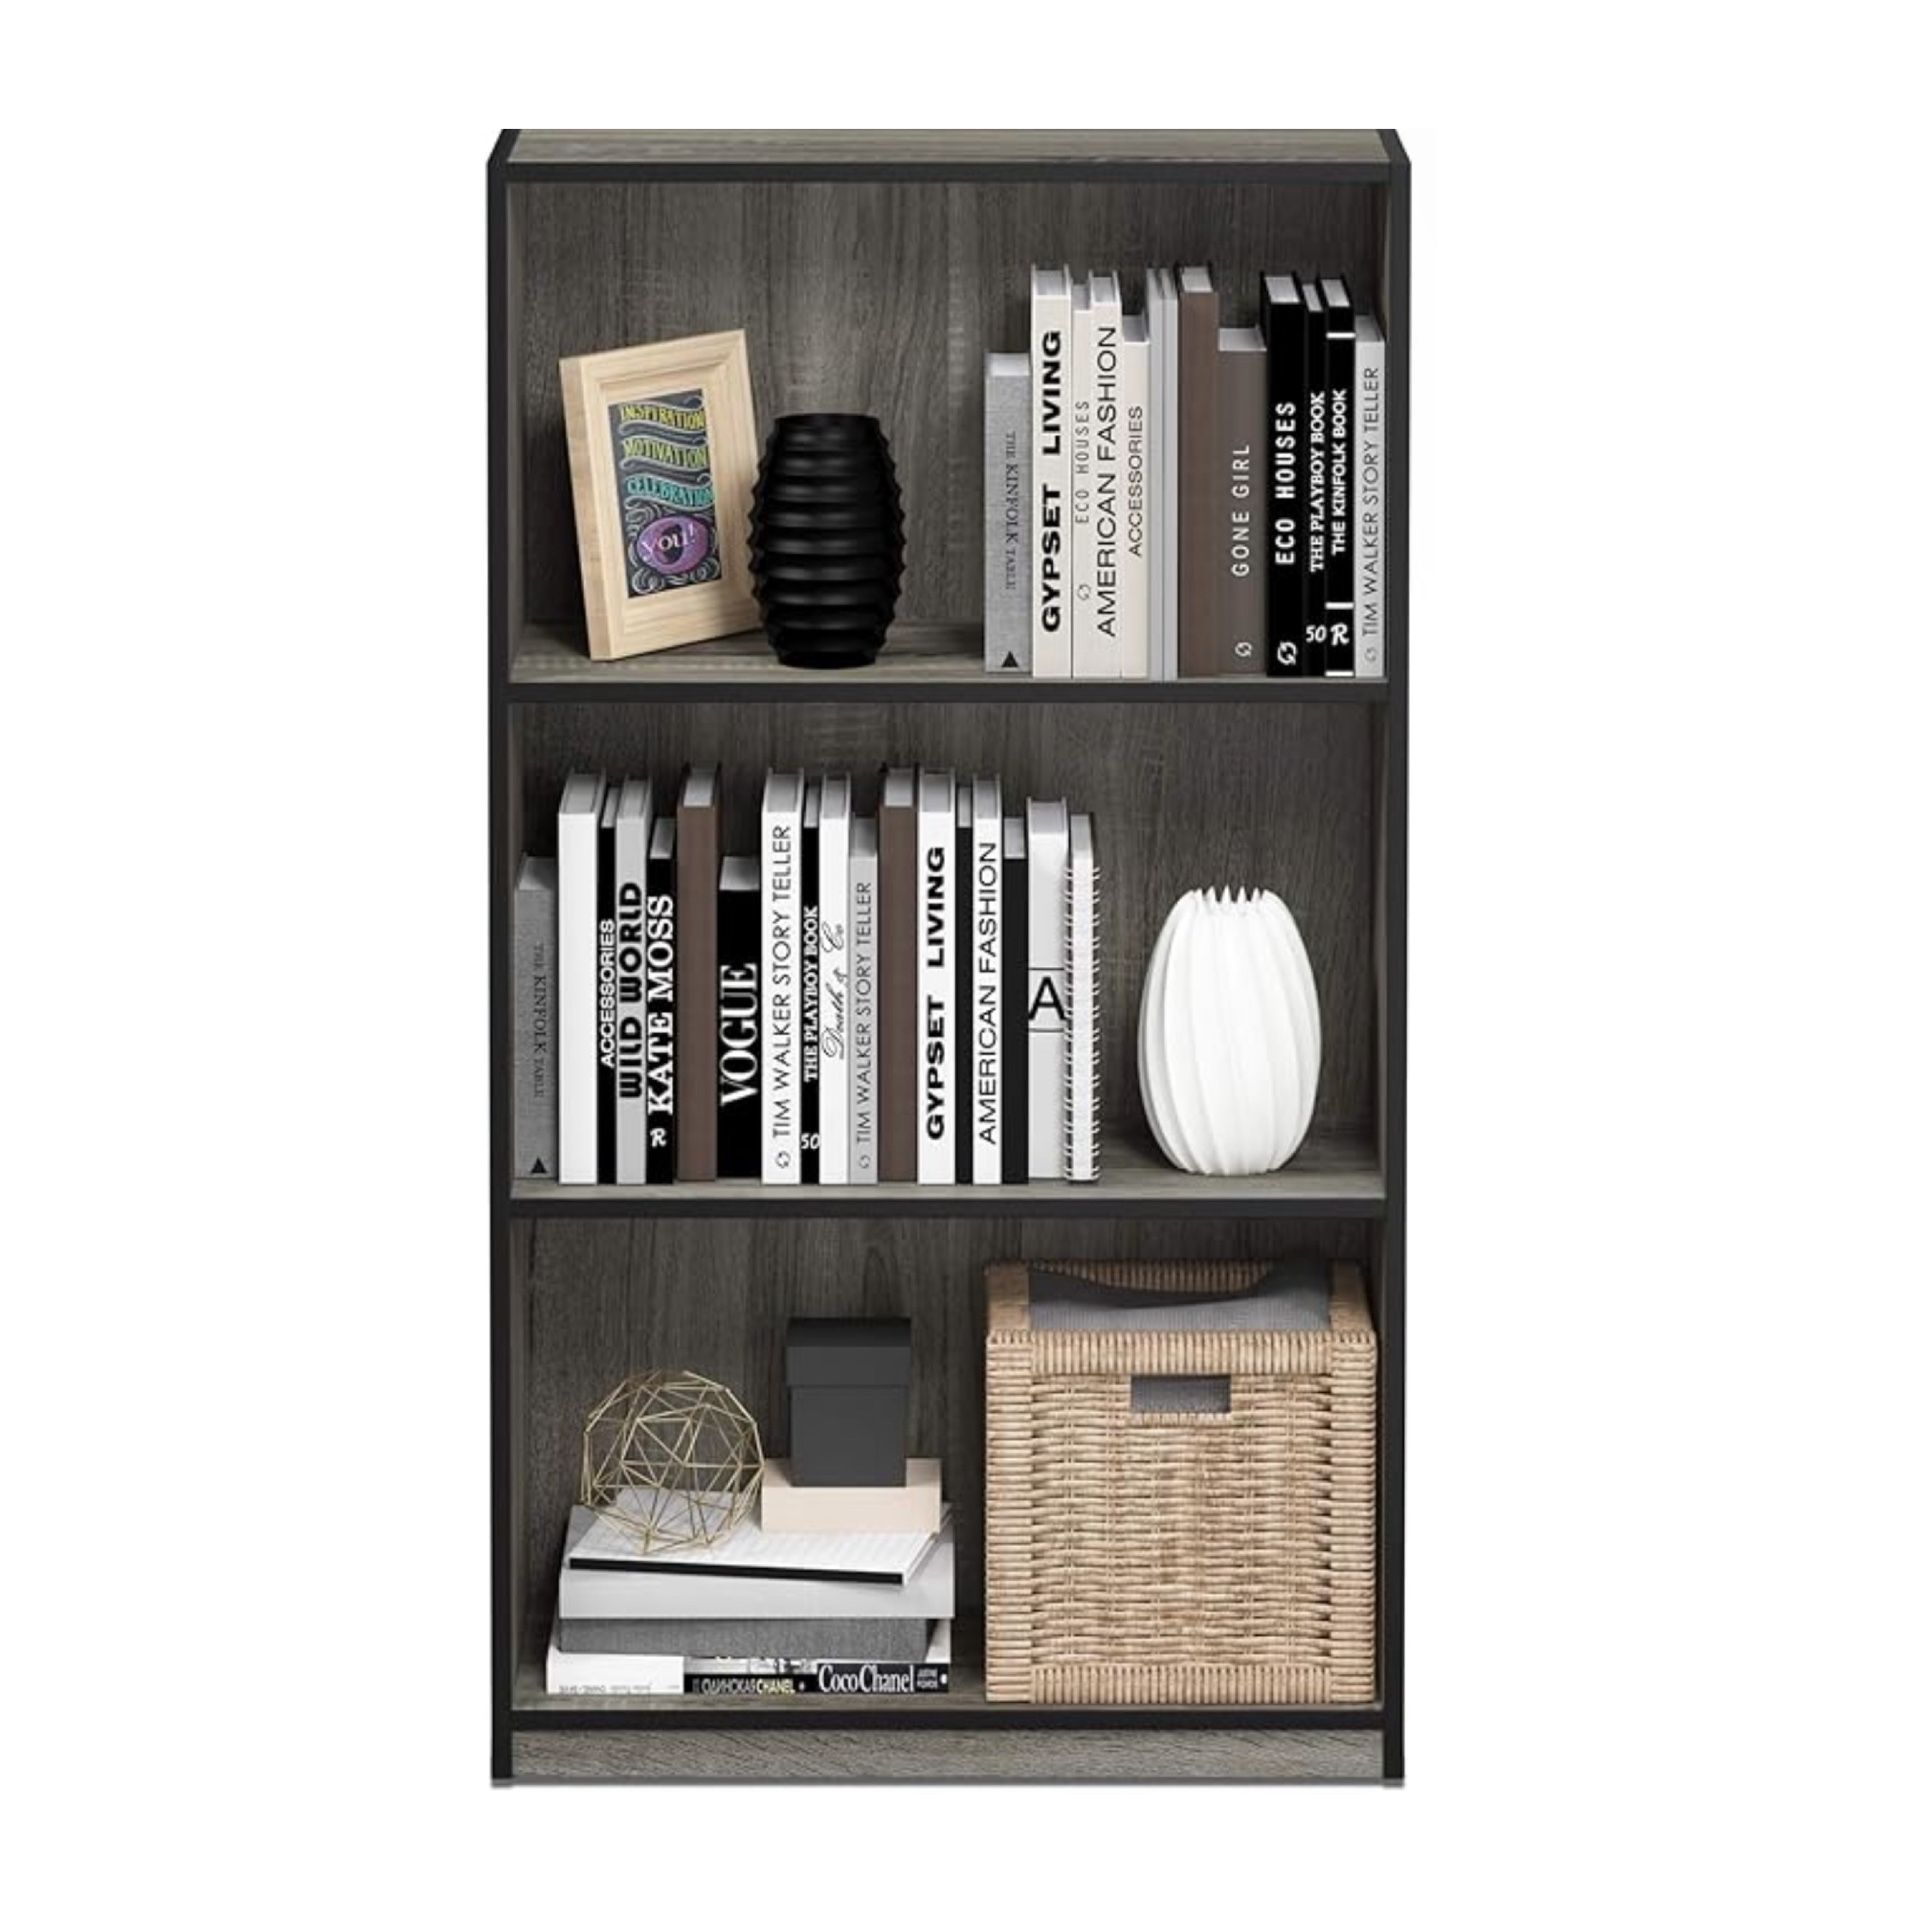 NEW 3-Tier Bookcase Storage Shelves